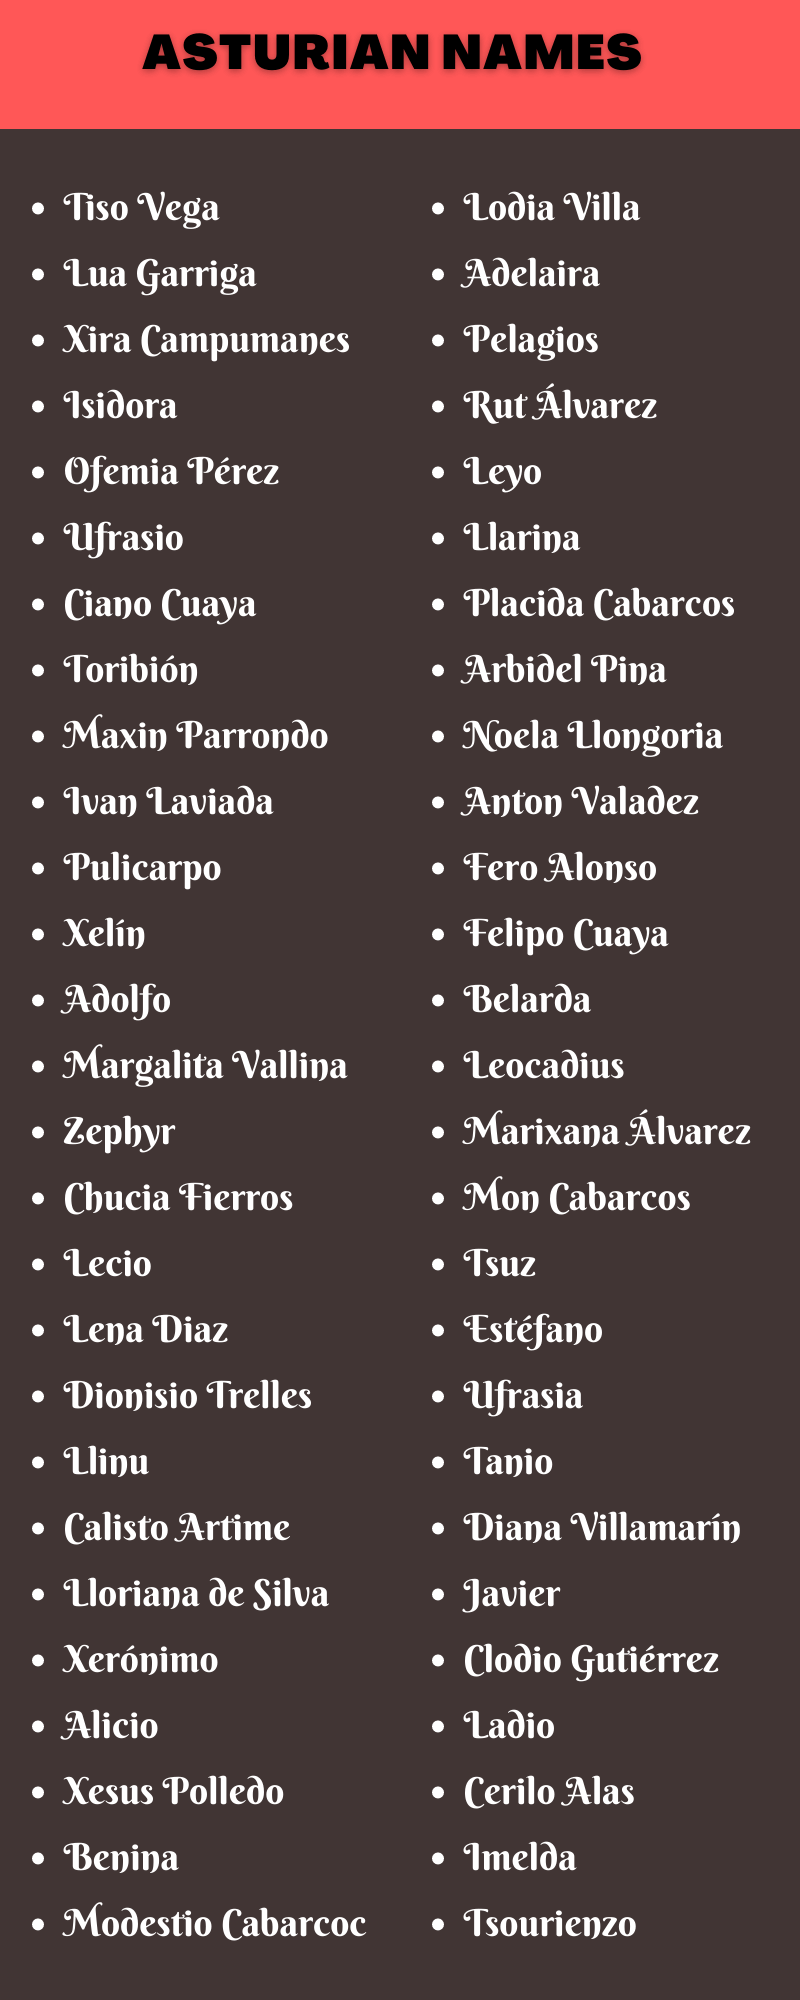 Asturian Names